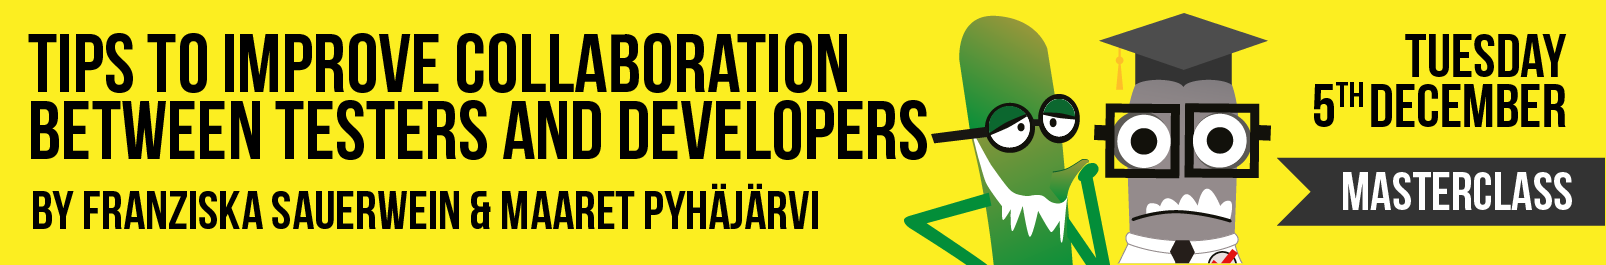 Tips to Improve Collaboration Between Testers and Developers | Franziska Sauerwein & Maaret Pyhäjärvi  banner image